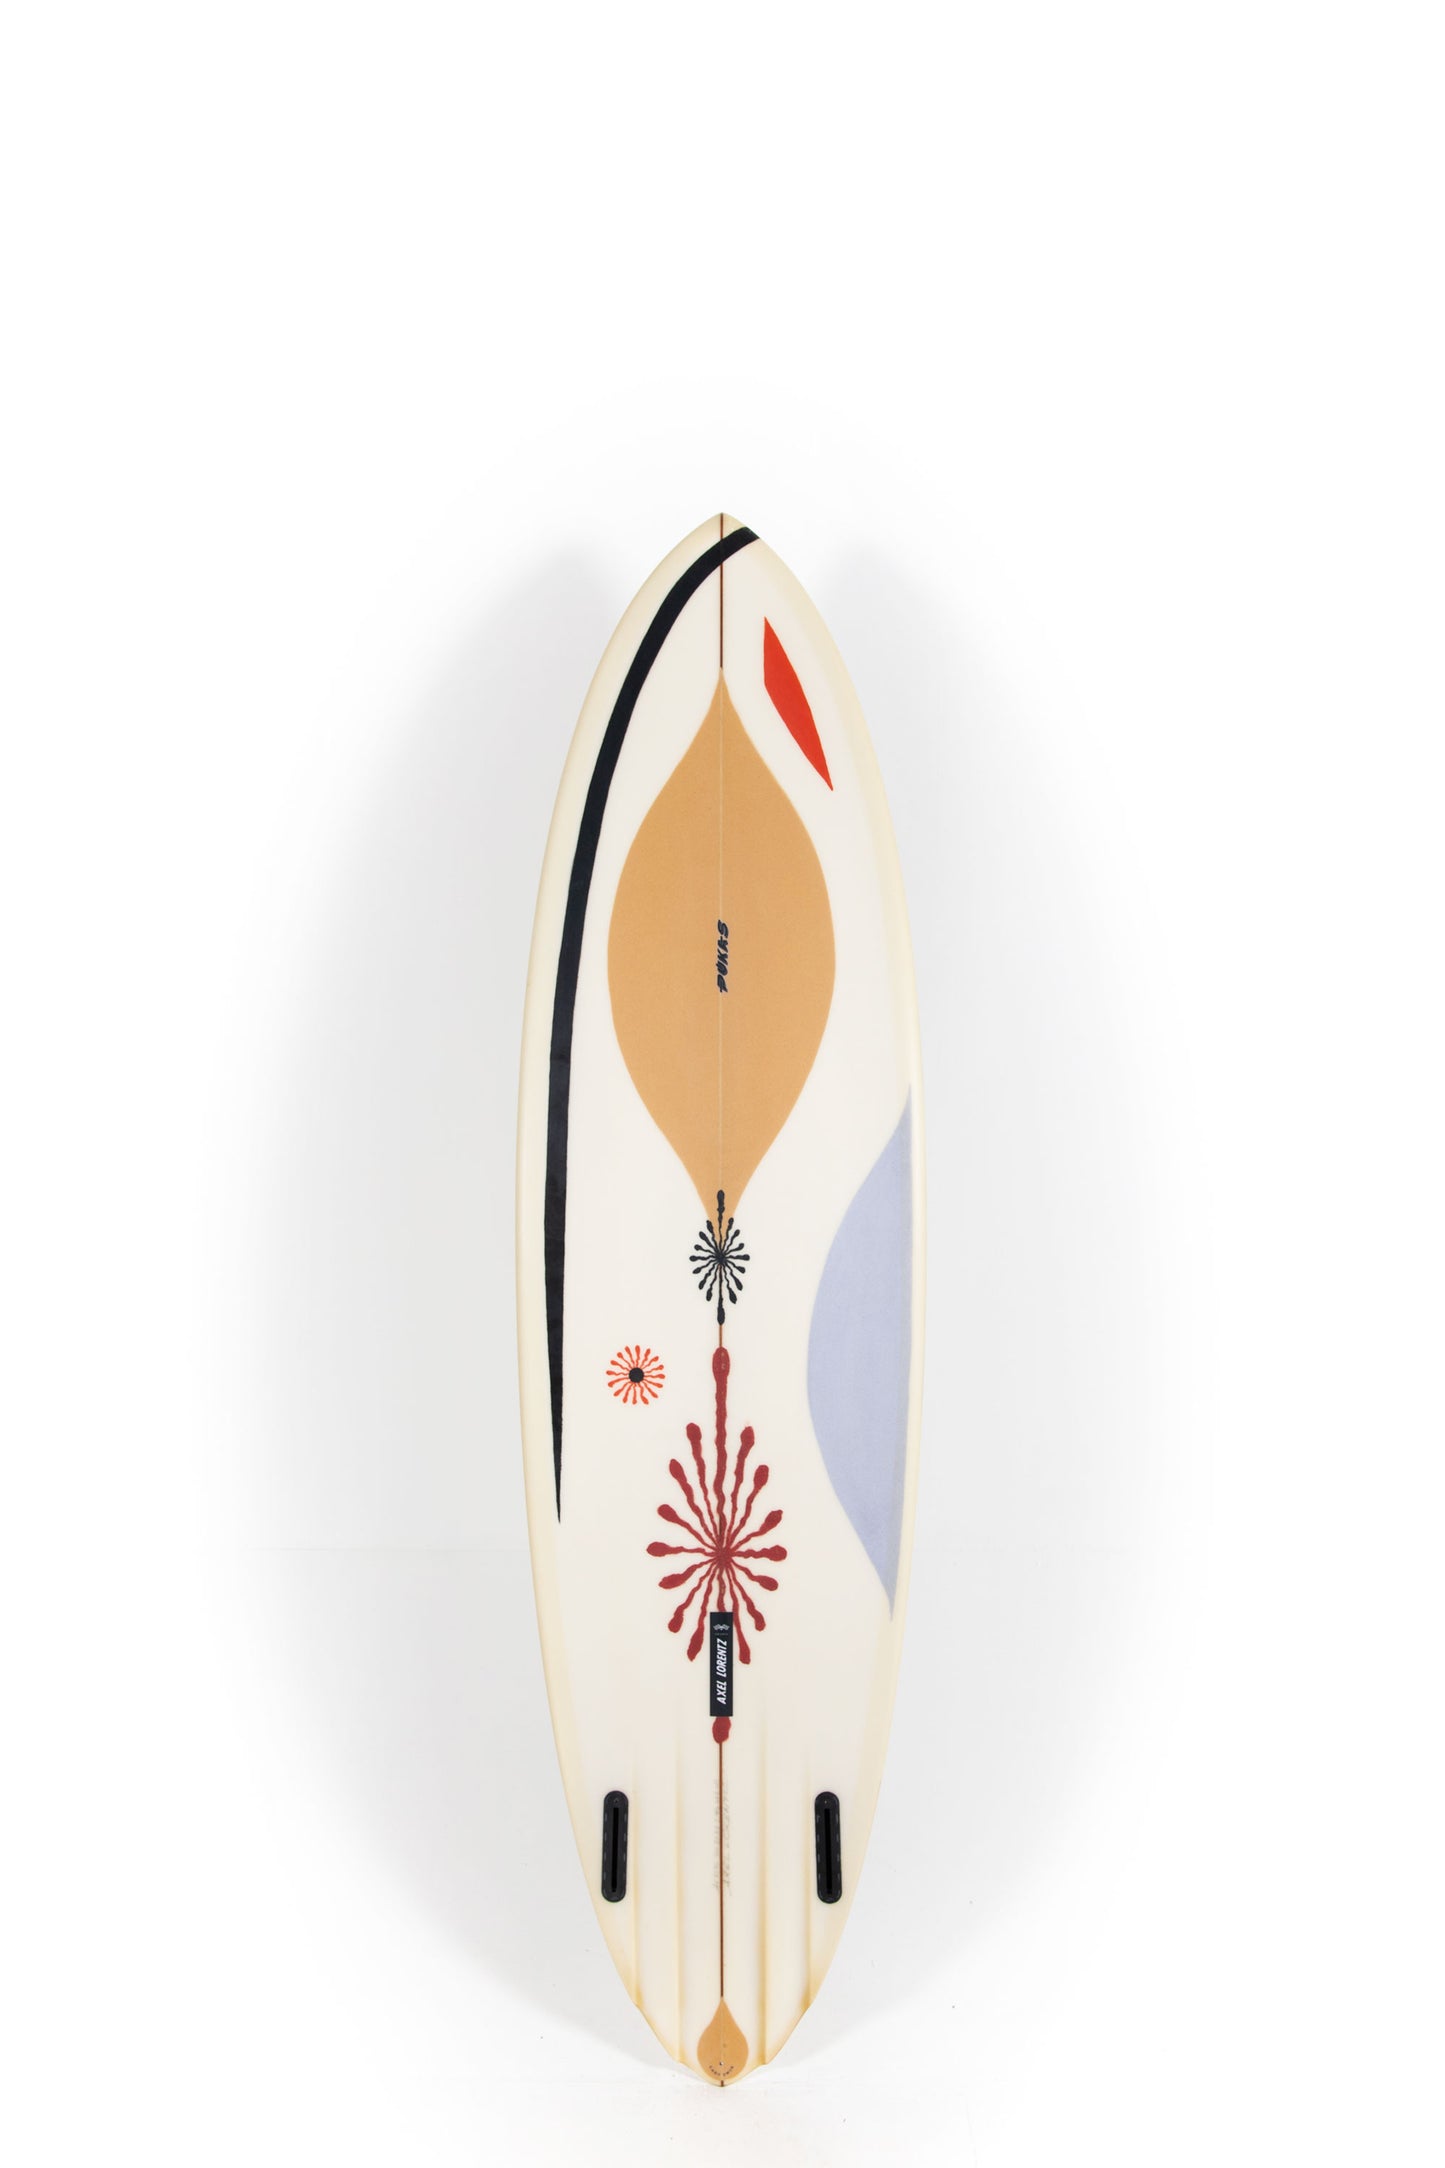 Pukas Surf shop - Pukas Surfboard - LADY TWIN by Axel Lorentz - 7’0” x 21,25 x 2,94 - 46L - AX07590